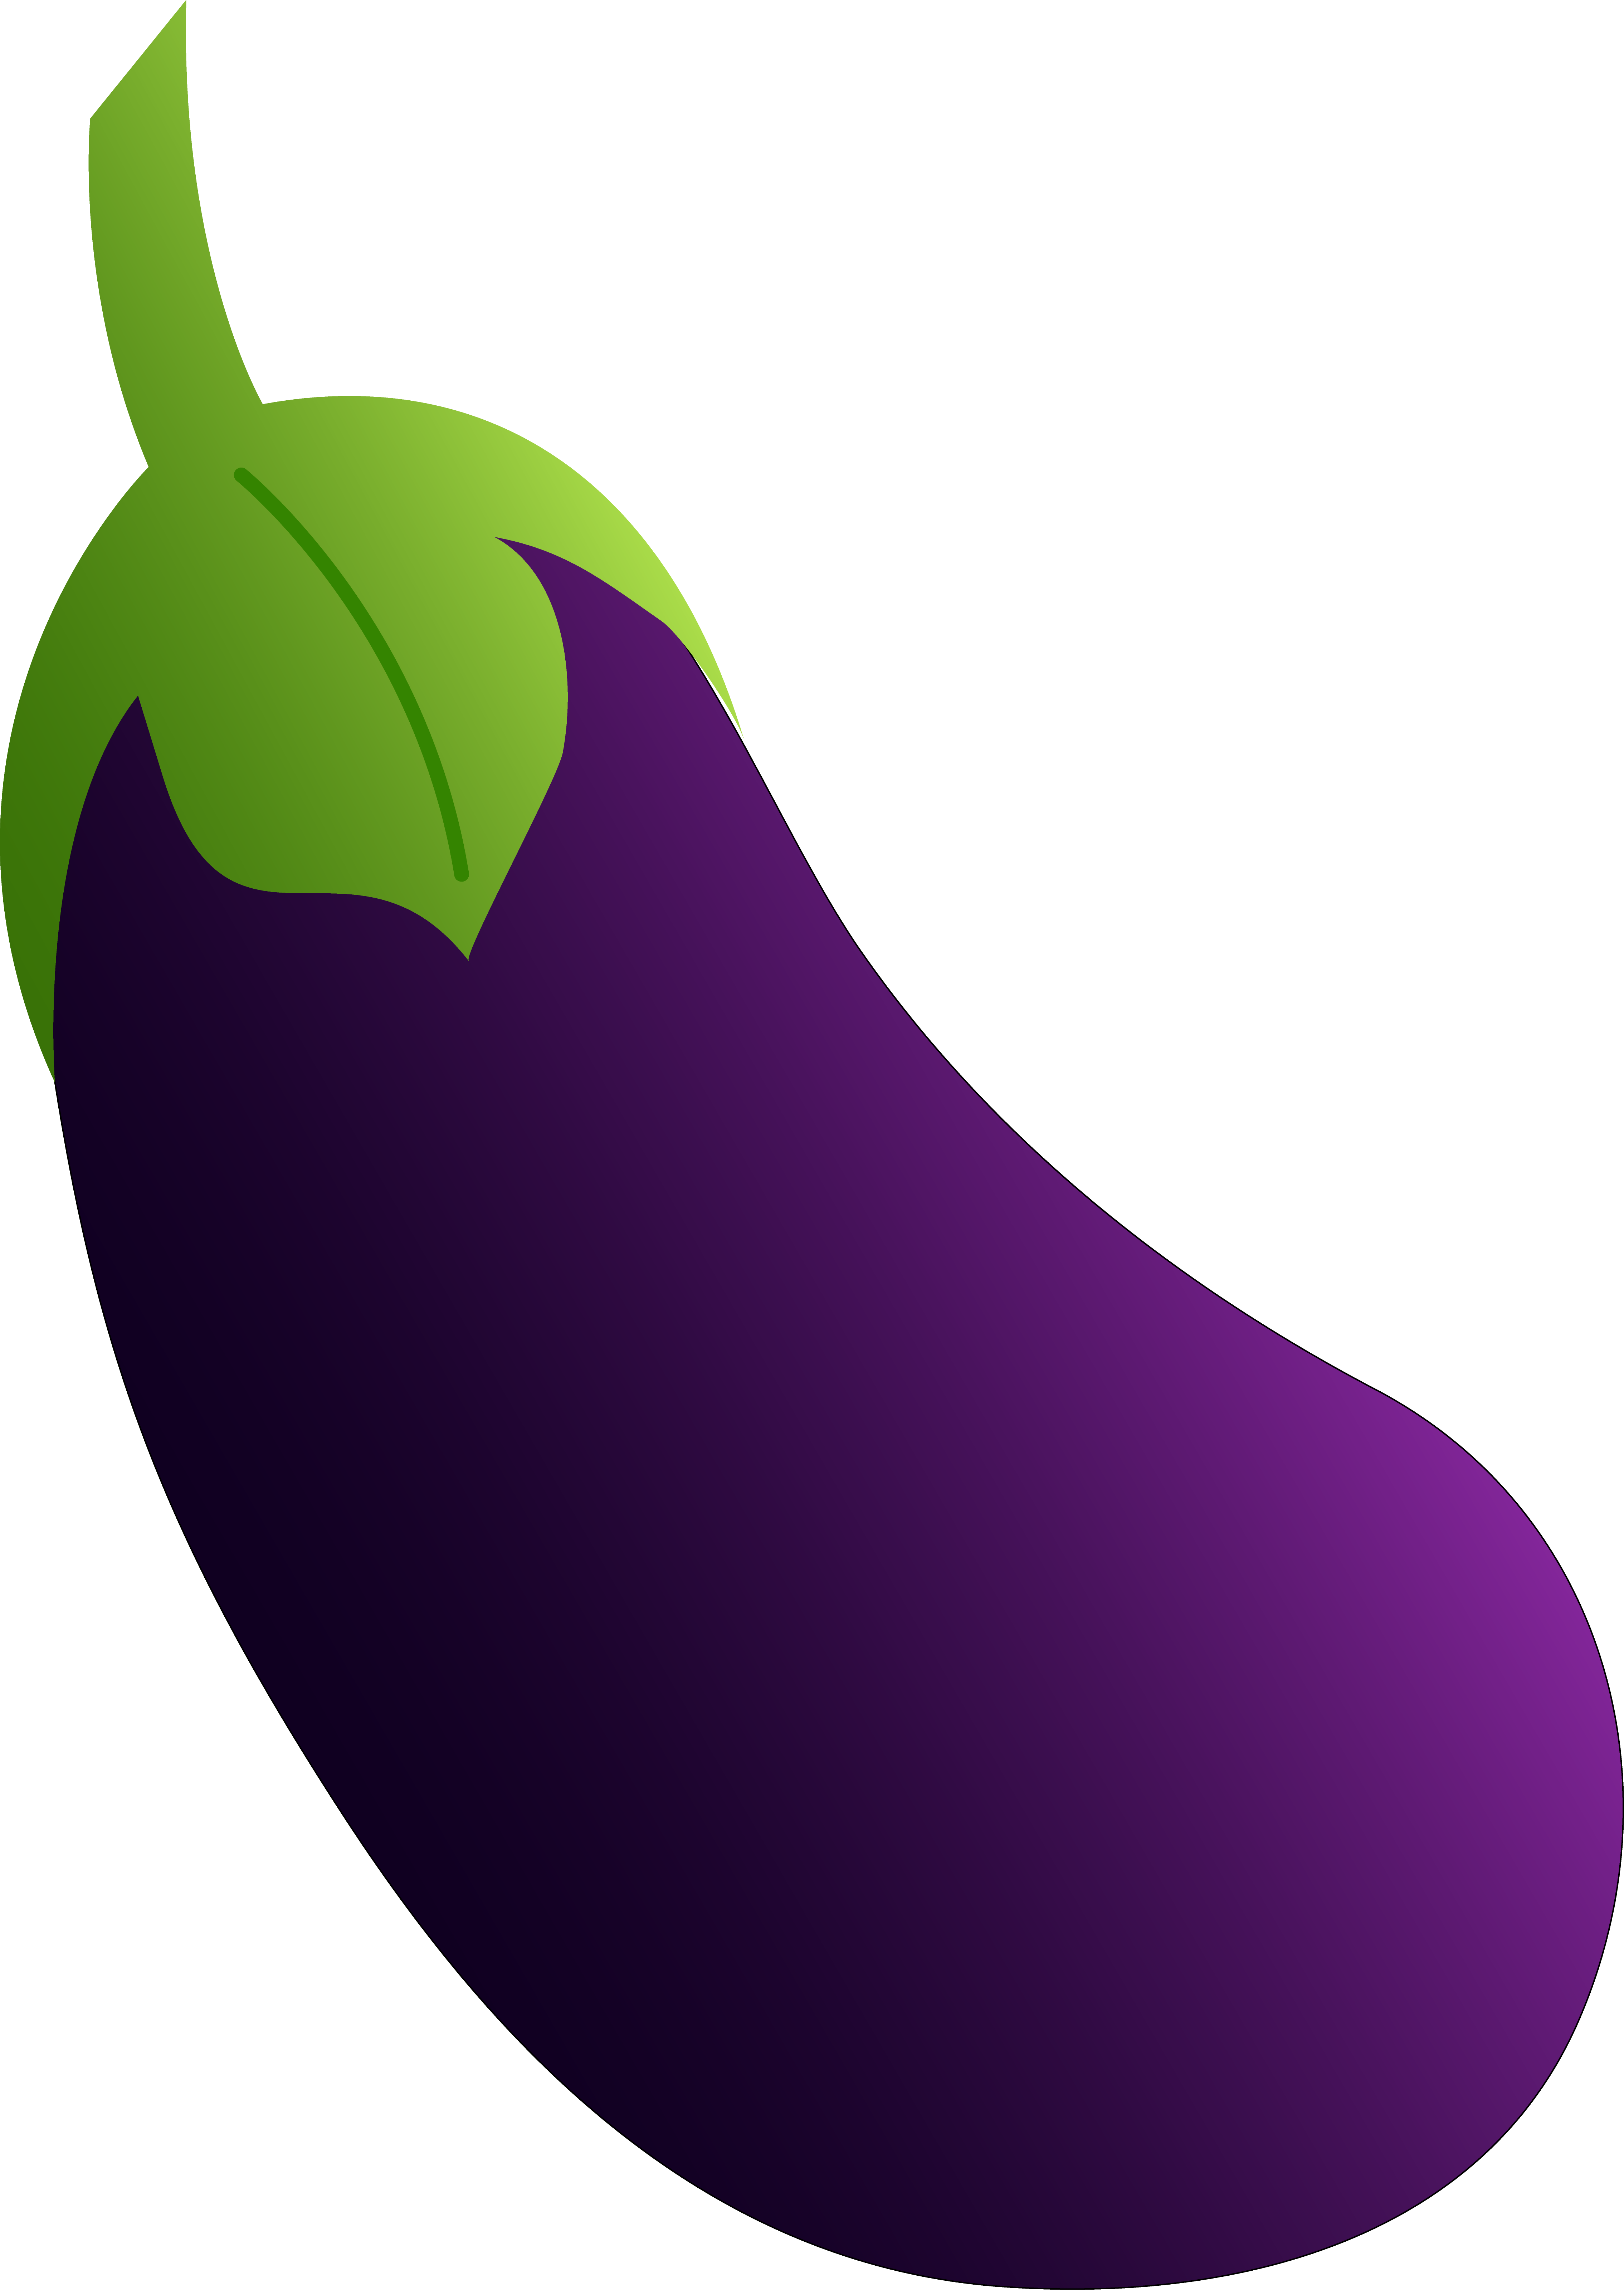 Clip art free on. Plants clipart eggplant